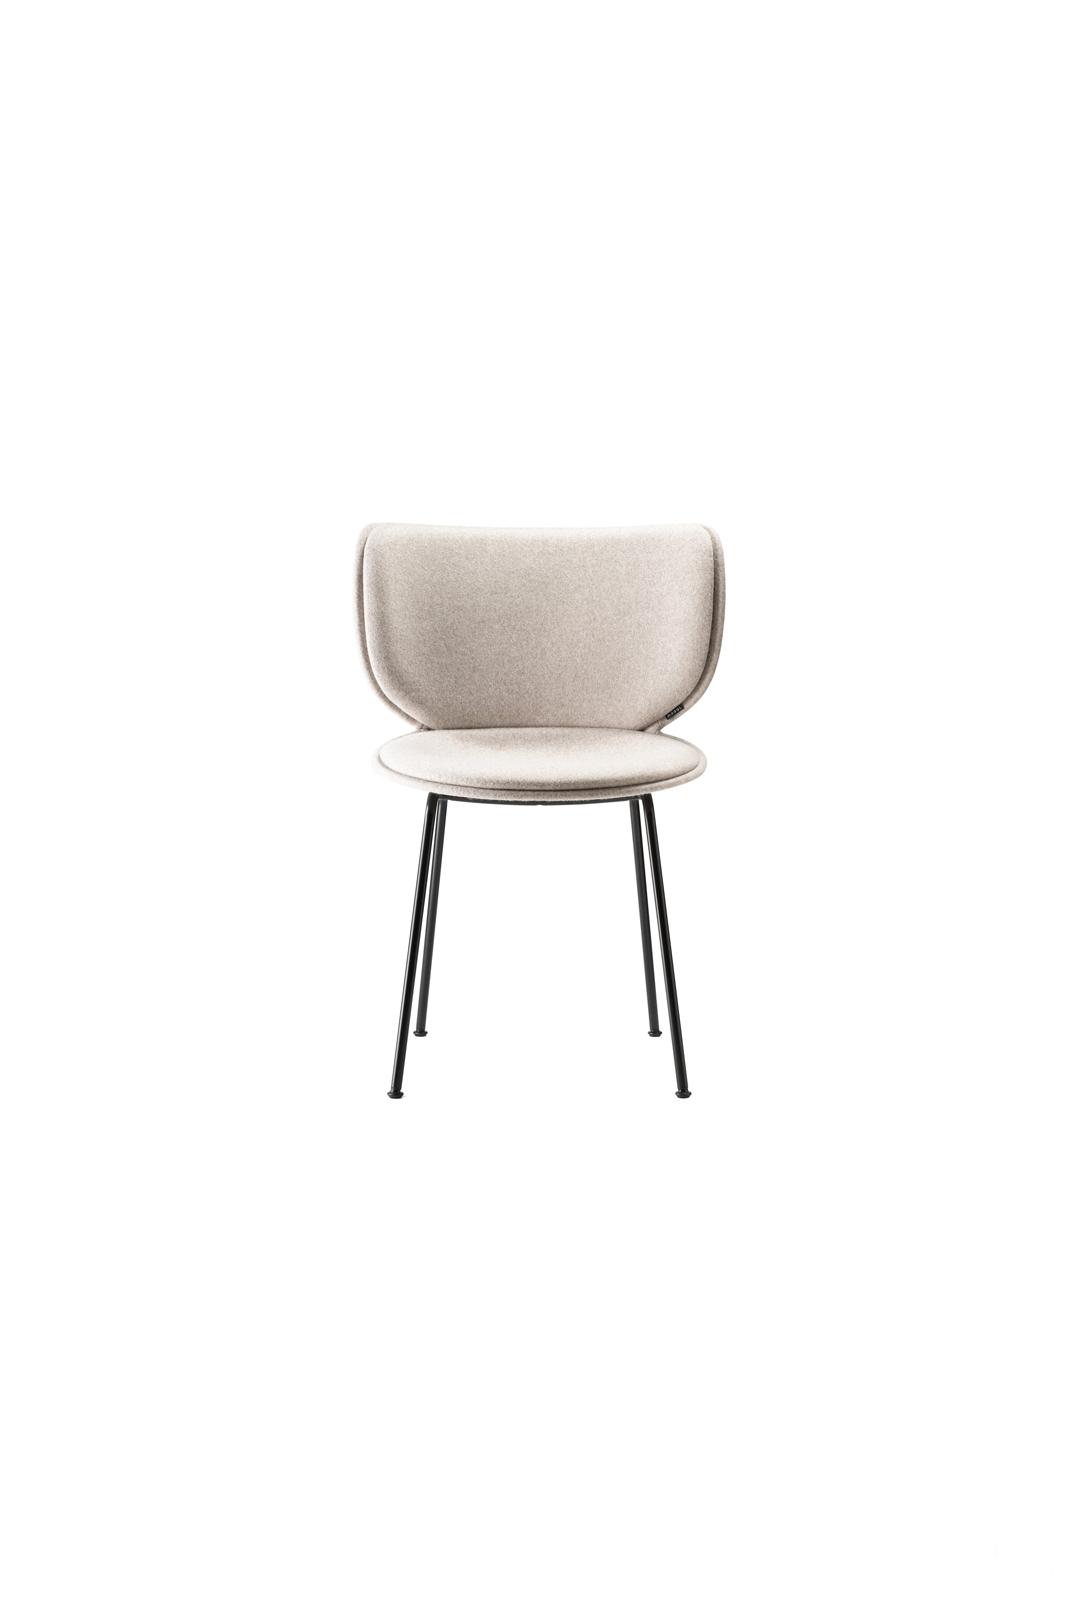 Стул Hana Chair Upholstered от Moooi — Фотография 1